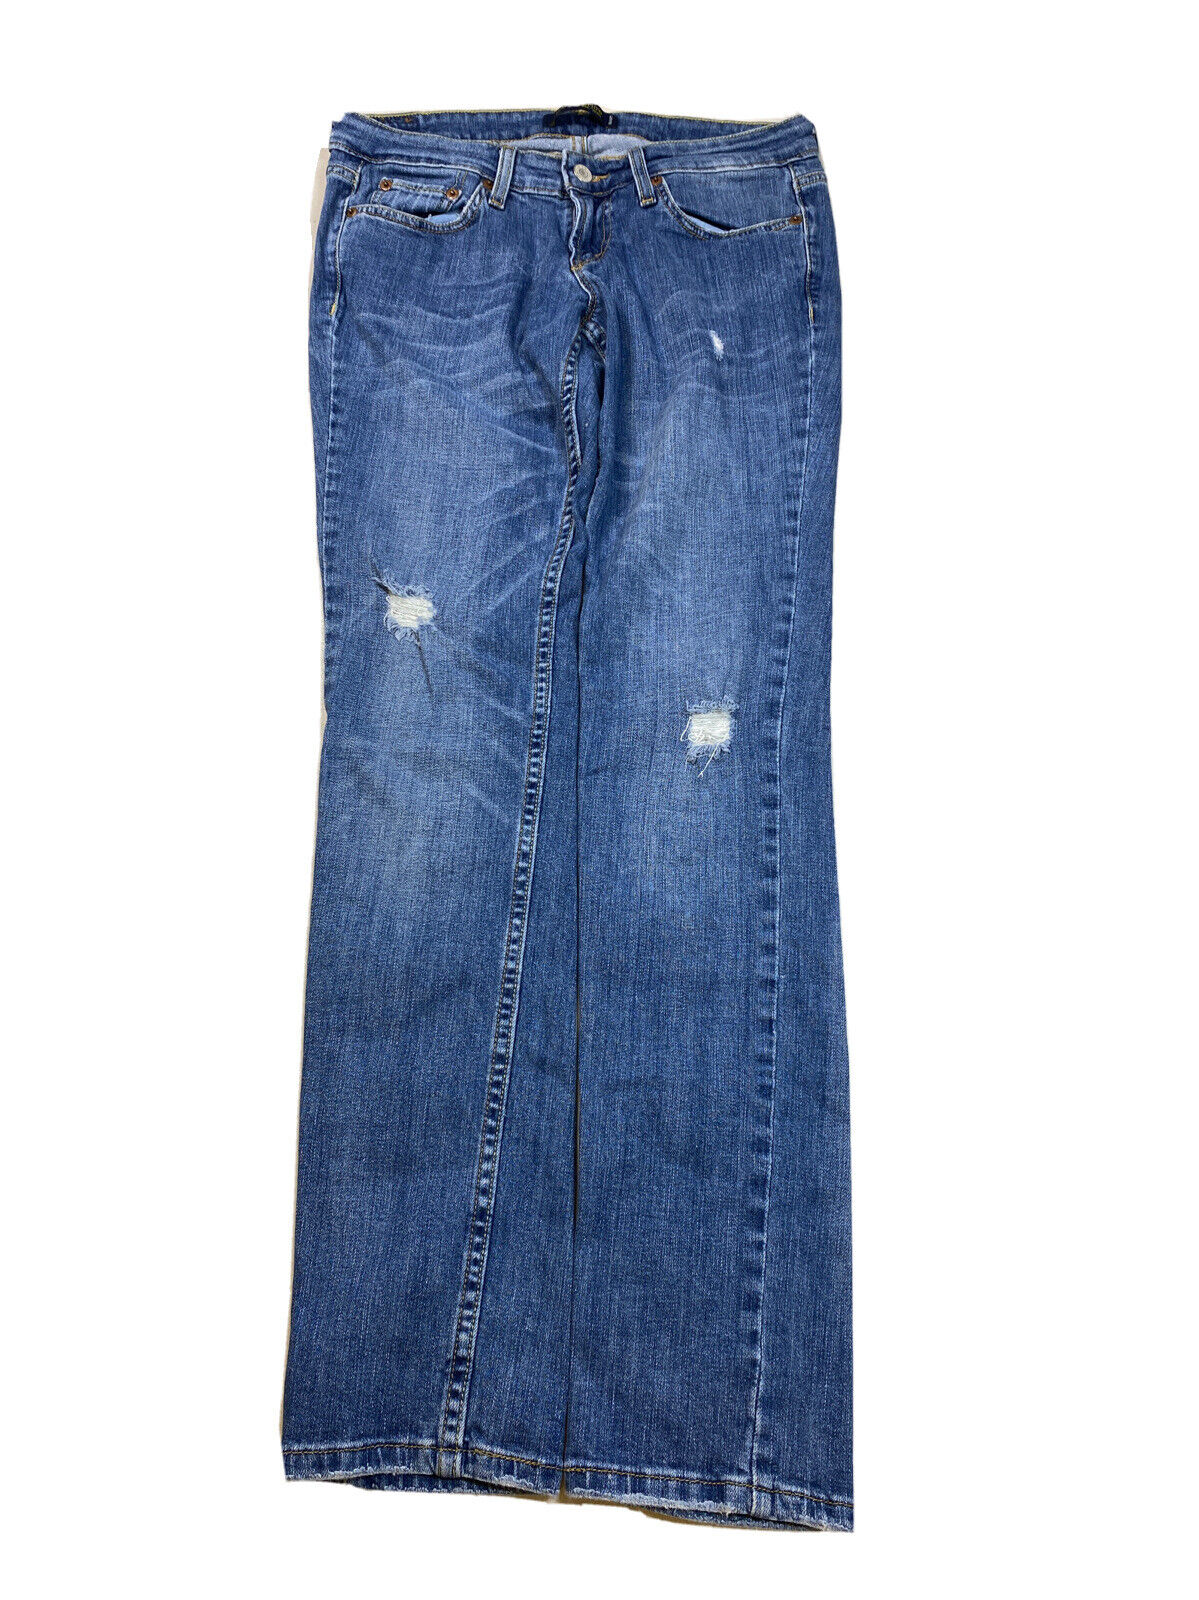 Levis Women's Medium Wash Too Superlow 524 Straight Leg Denim Jeans - 7